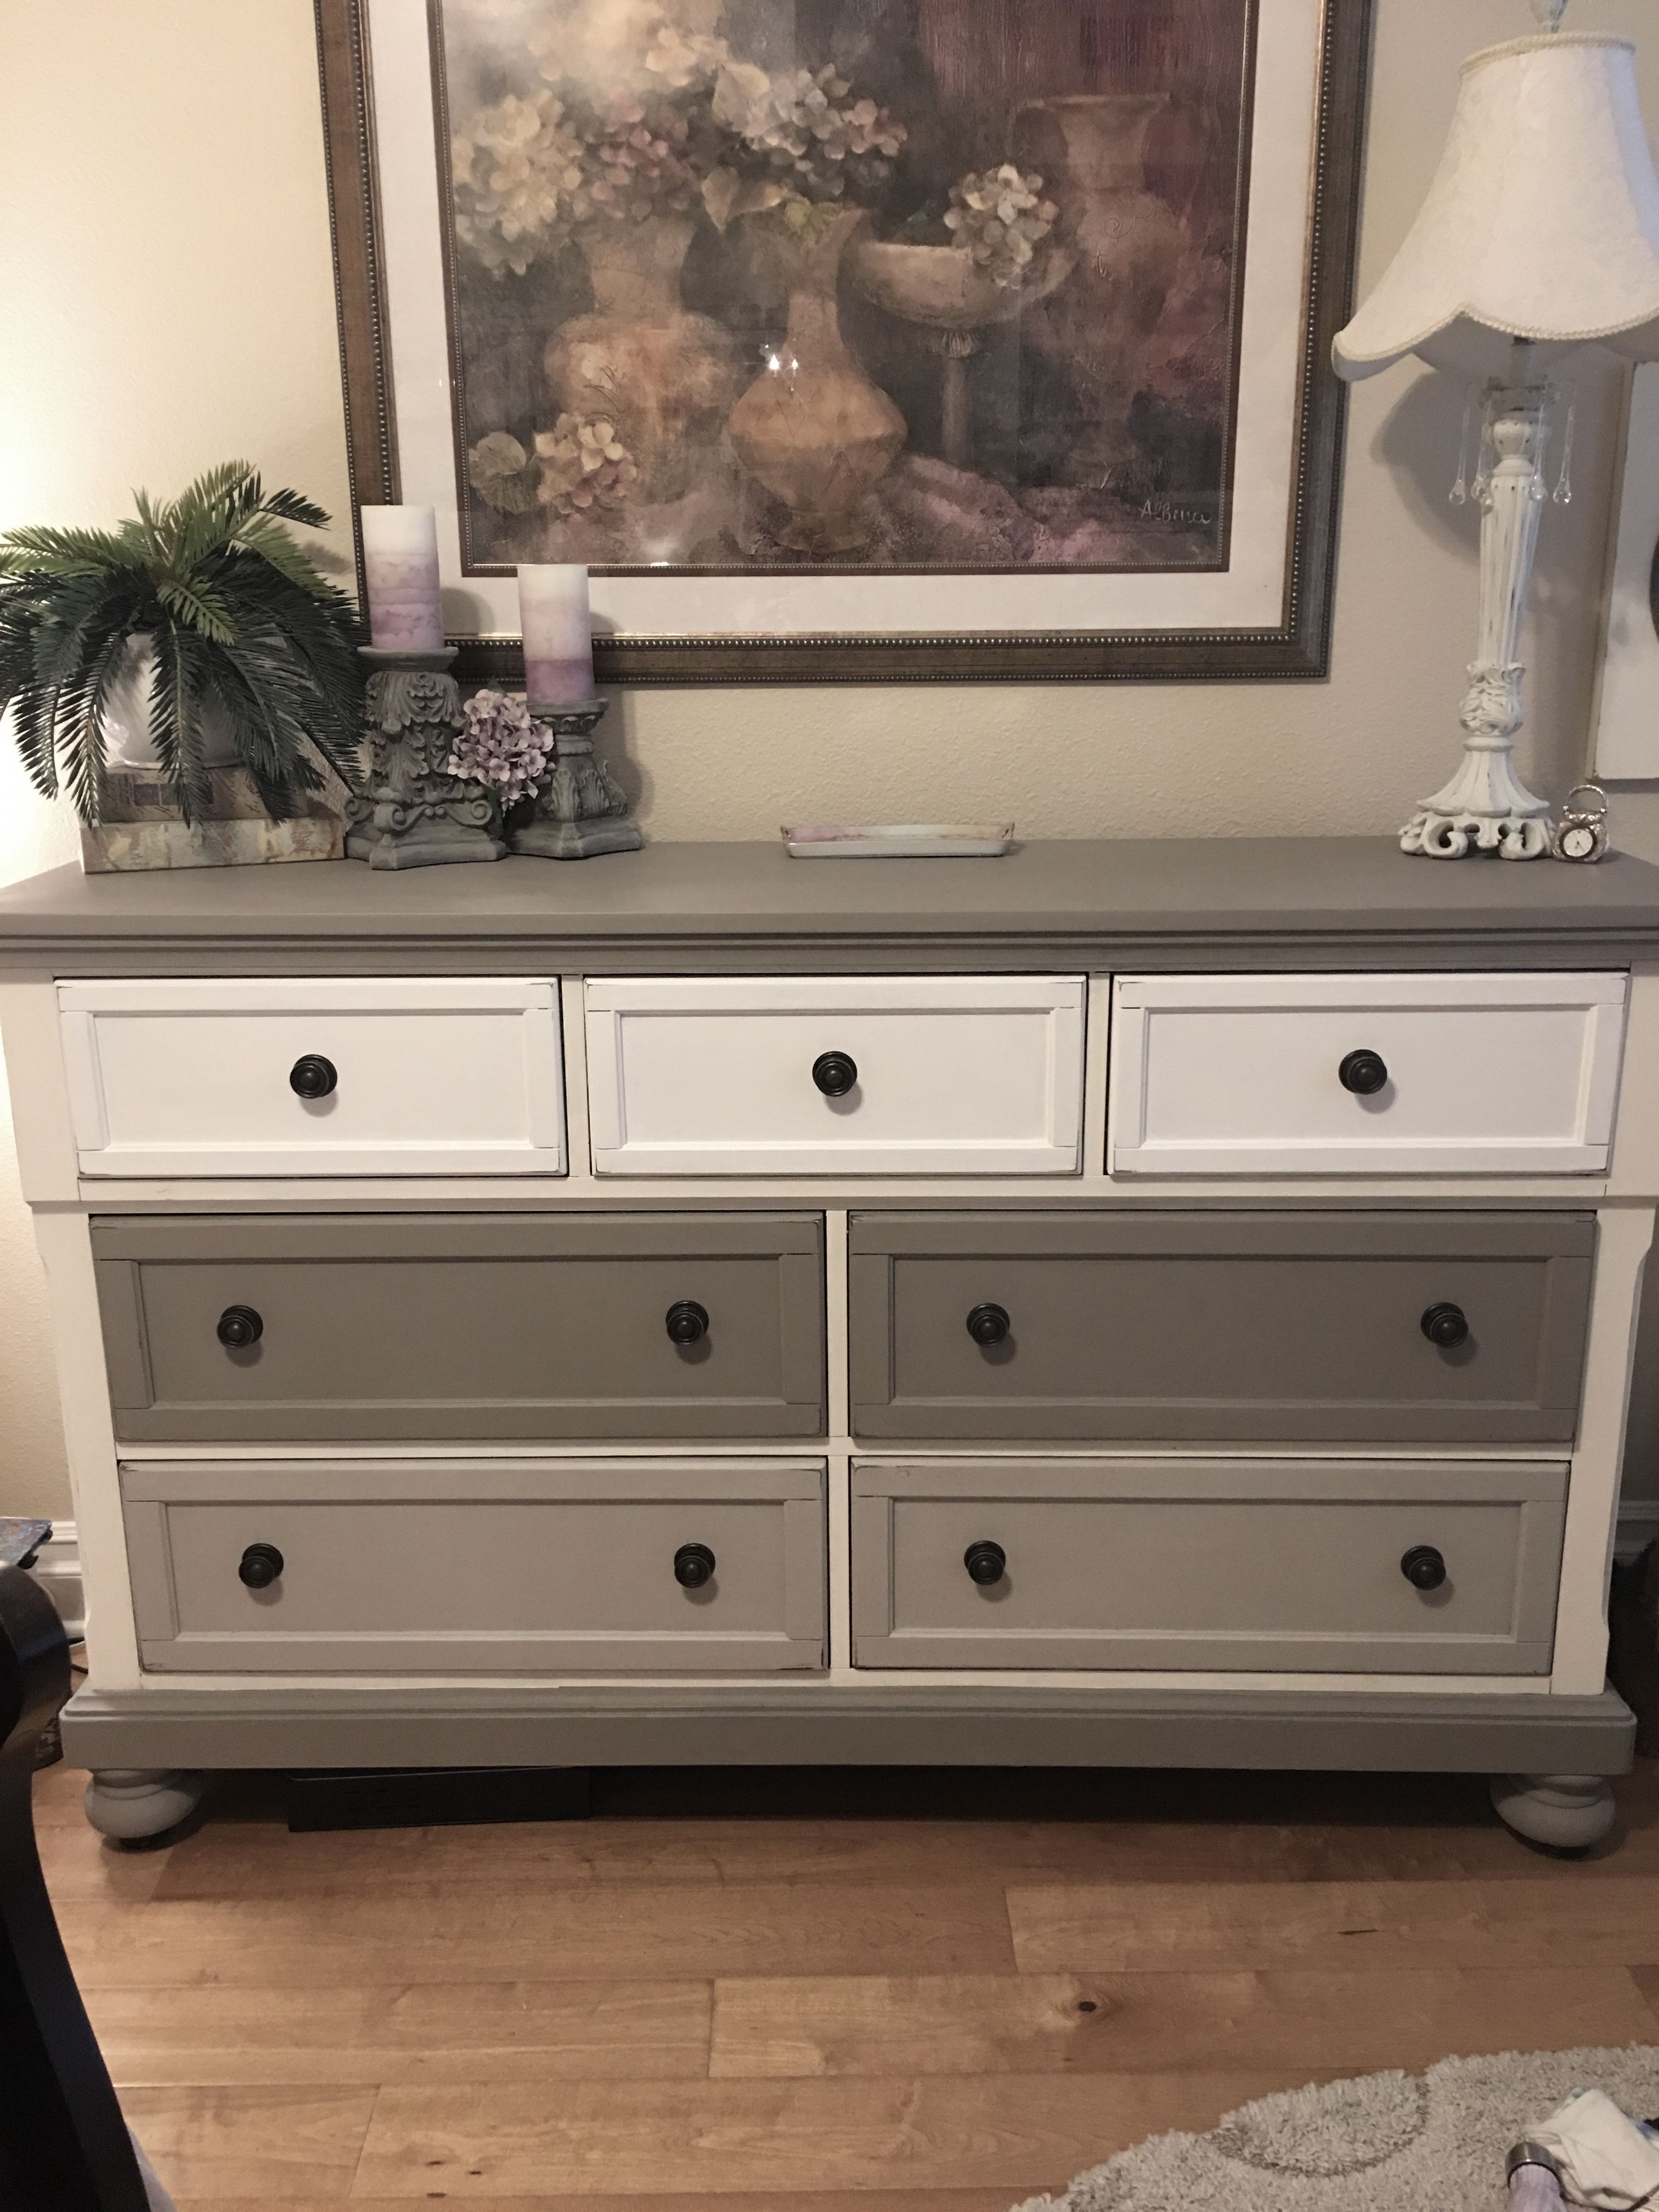 Dresser With Annie Sloan Chalk Paint. Ombre Look. Pure White inside Annie Sloan Chalk Paint Furniture Ideas